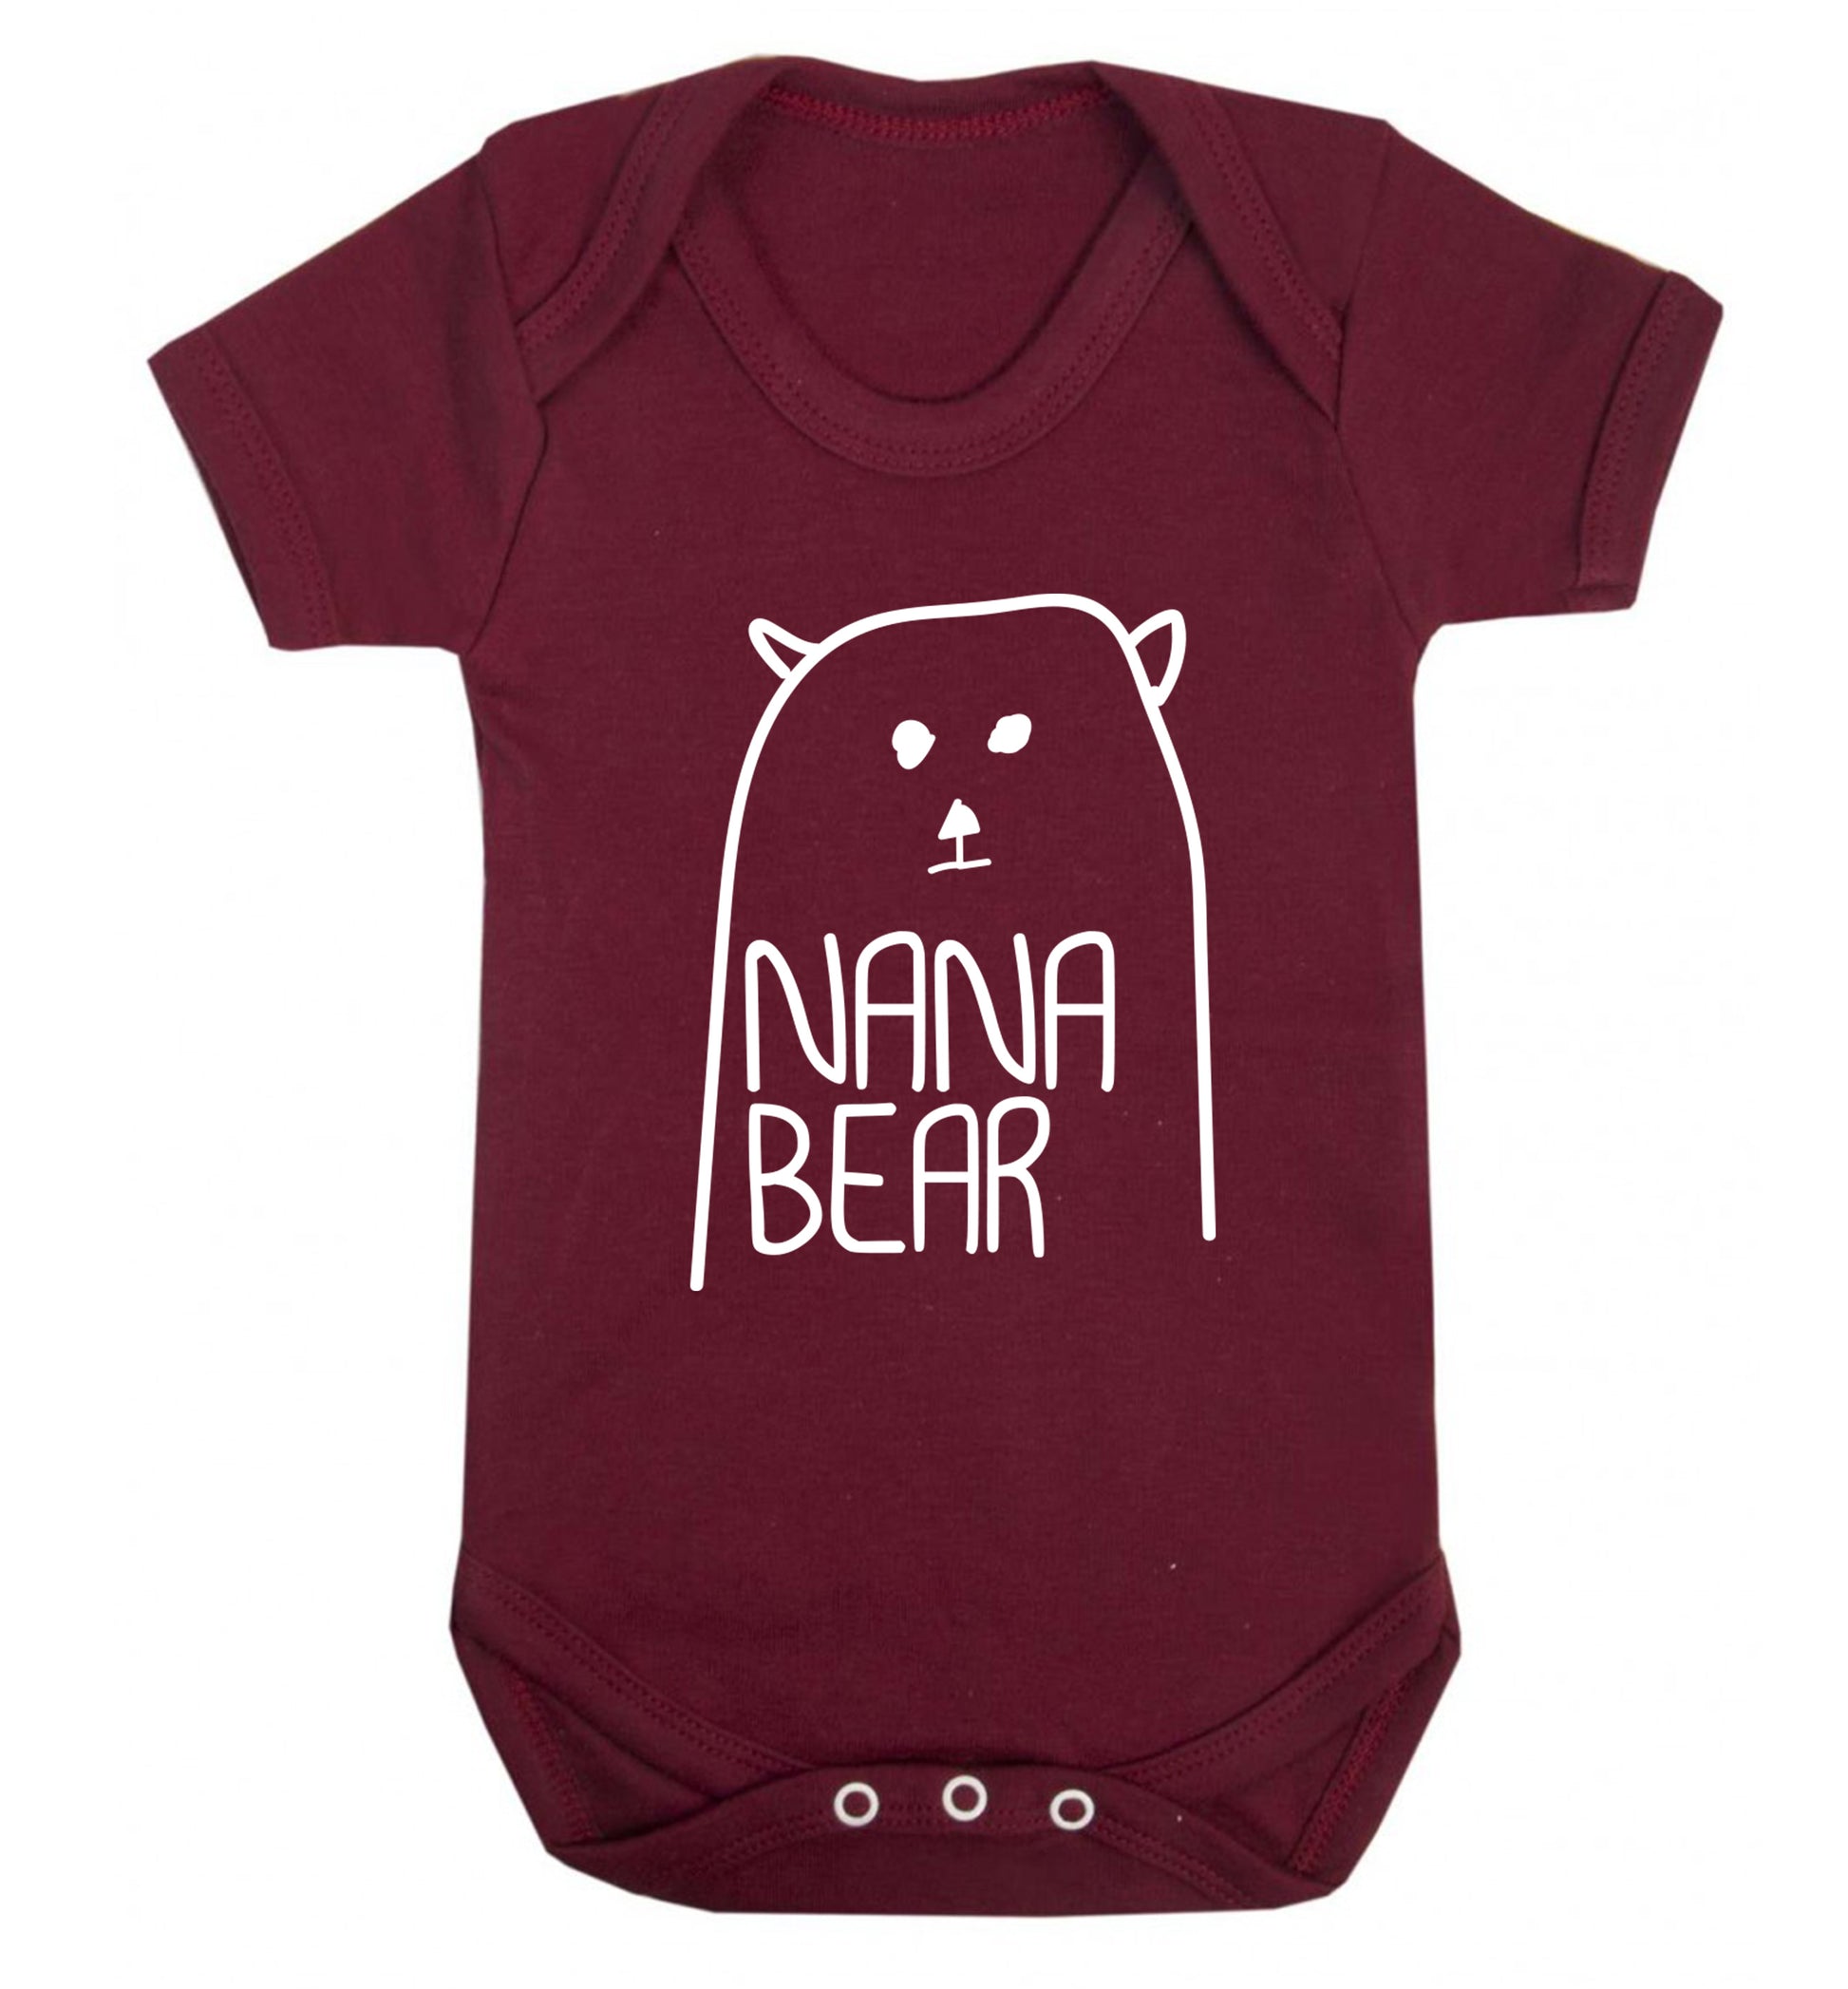 Nana bear Baby Vest maroon 18-24 months